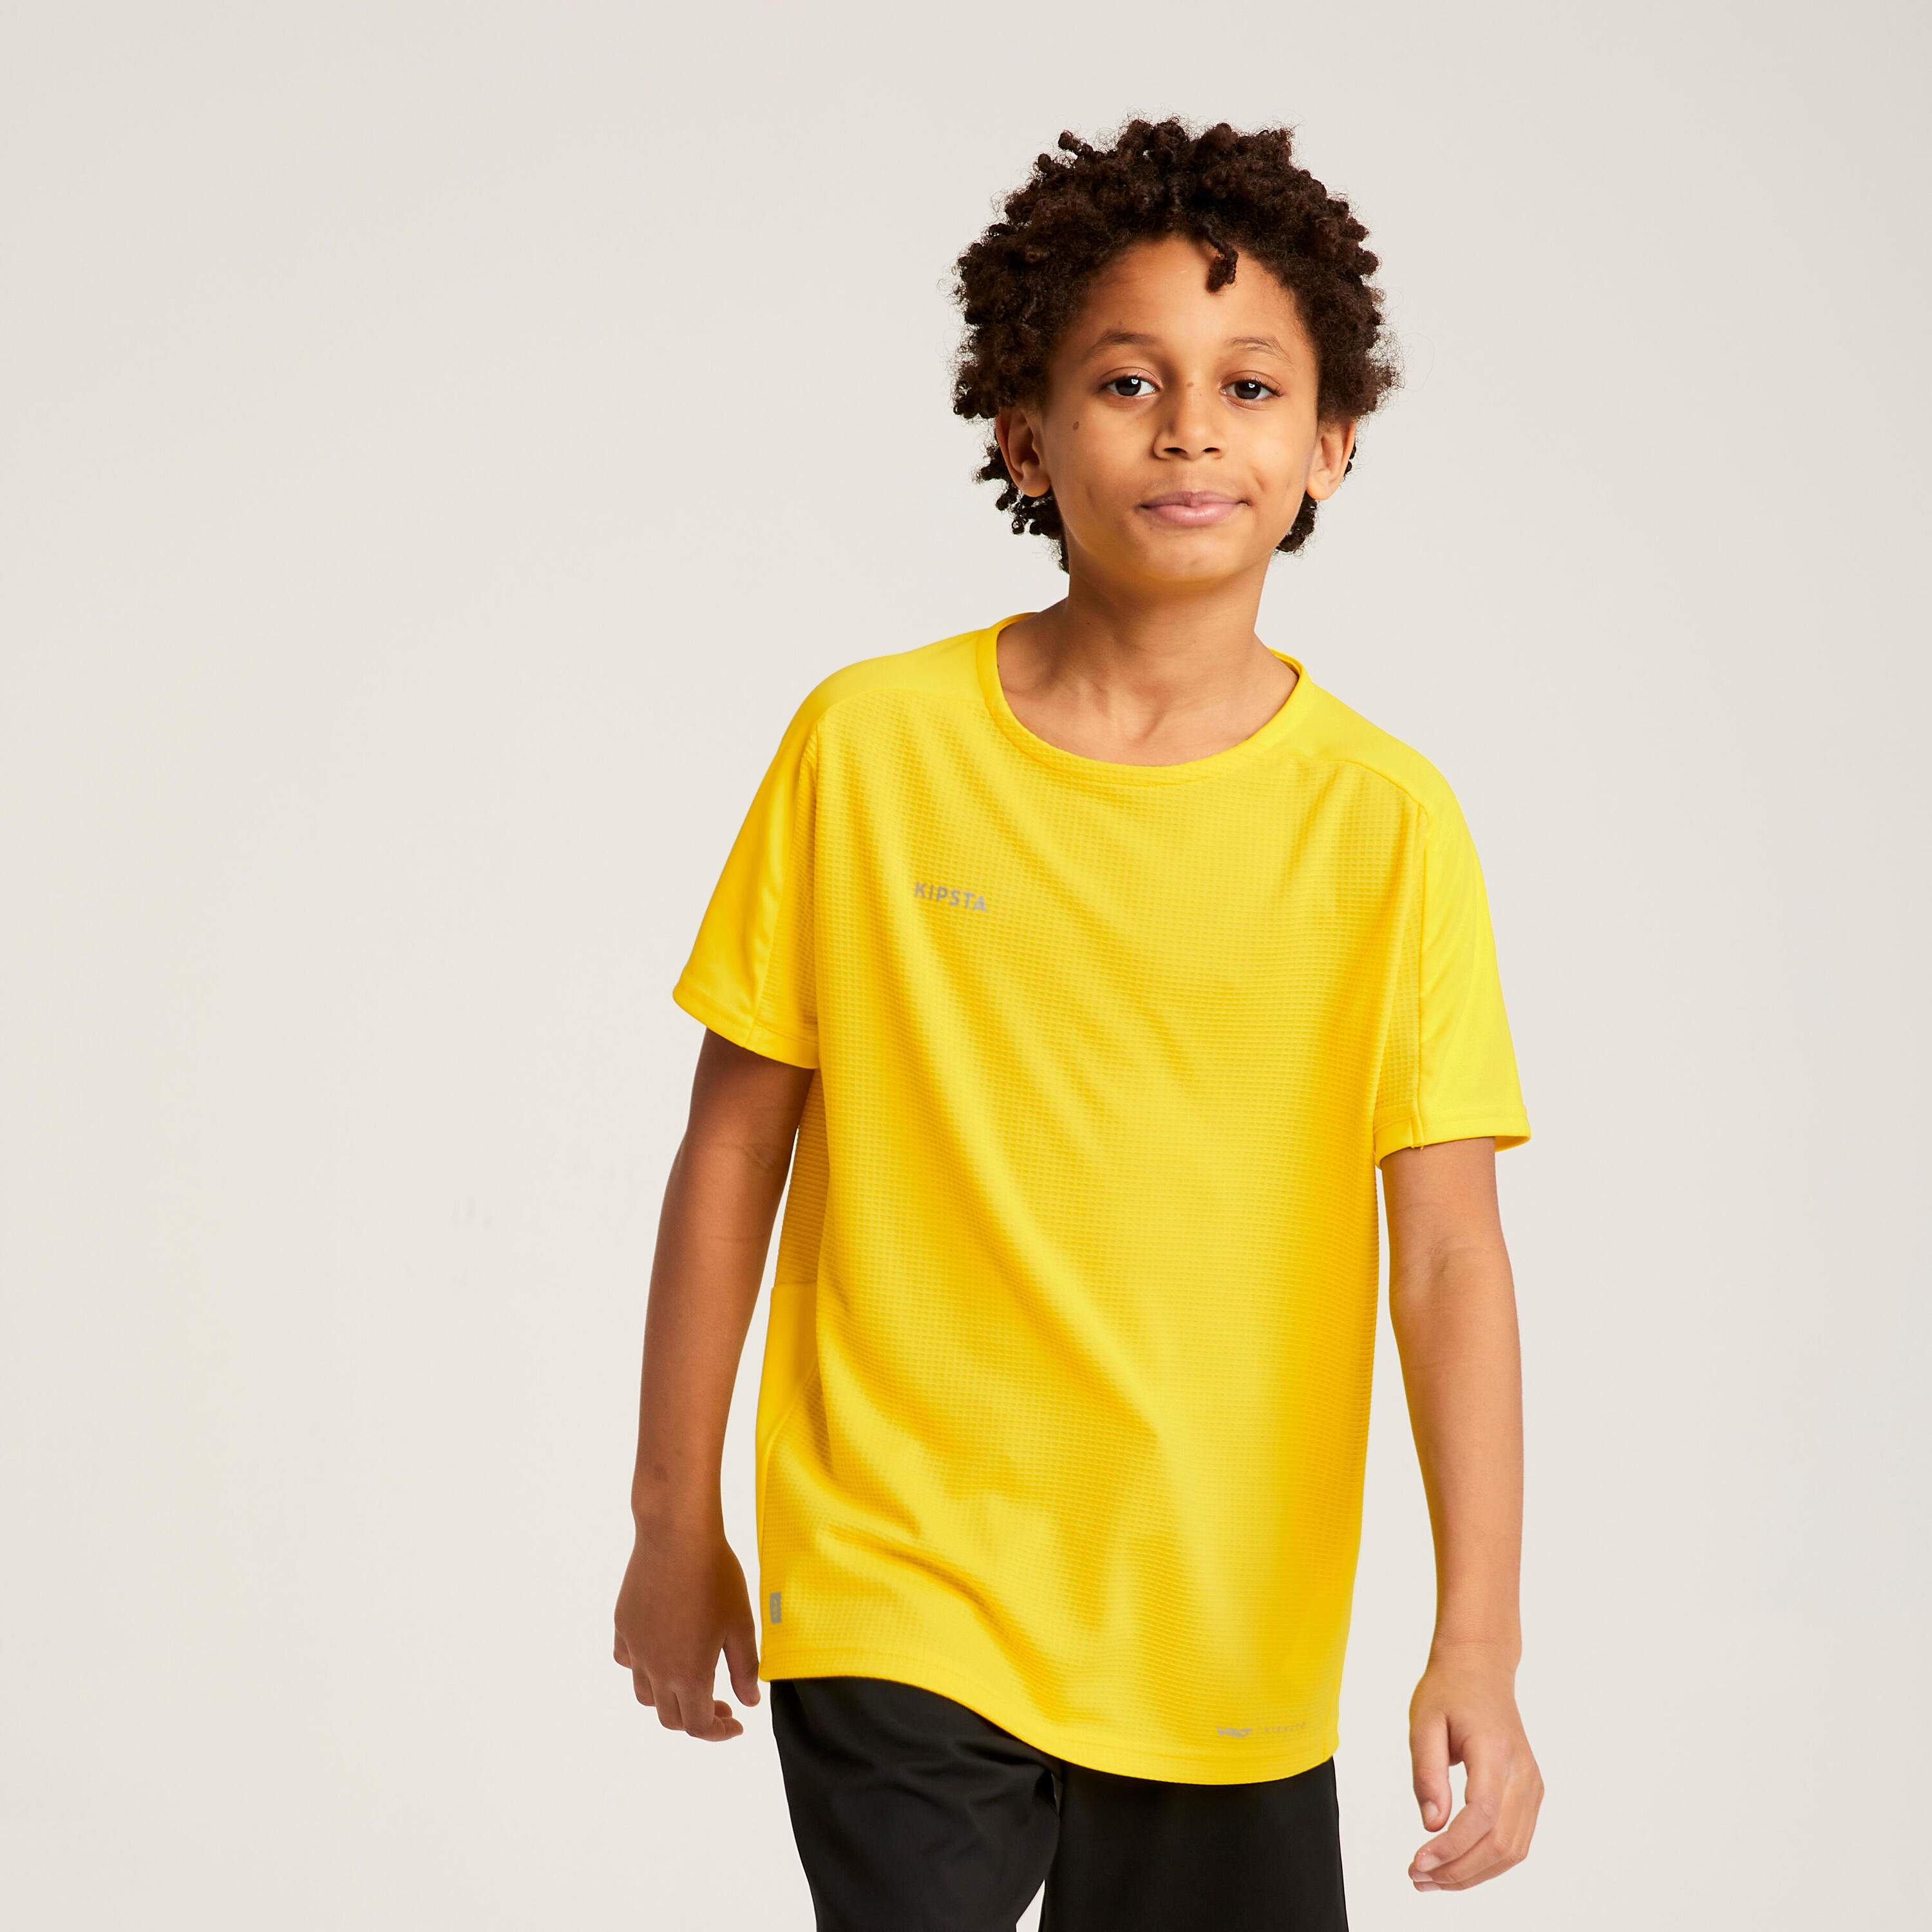 Refurbished Kids Short-Sleeved Football Shirt - B Grade 6/7